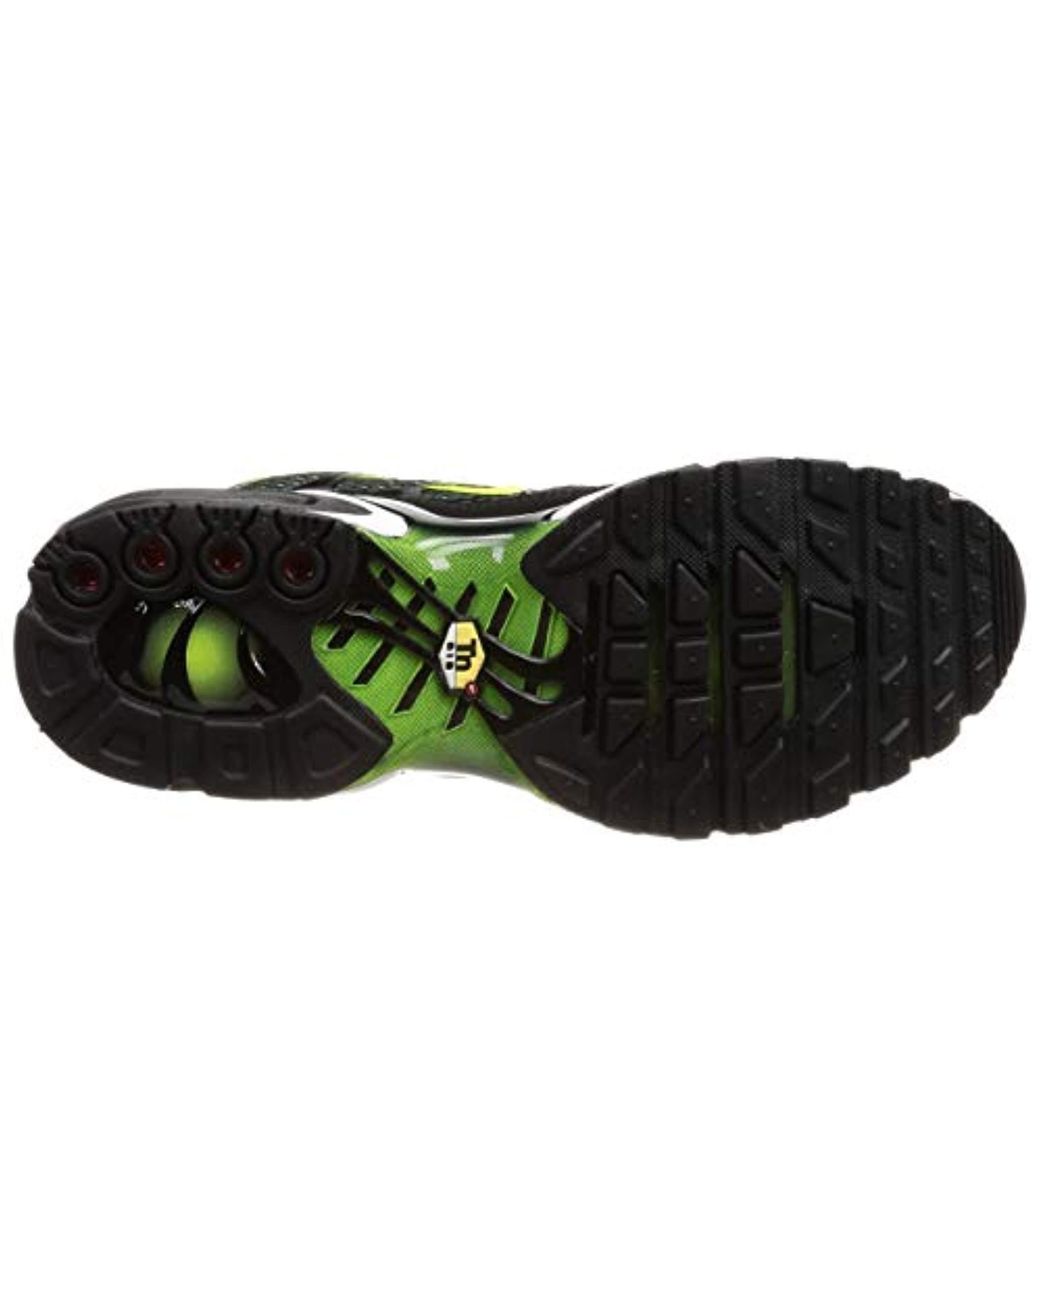 Nike Original Max Plus Tuned Tn Black Volt Green Trainers Shoes 852630 036 for Men | UK